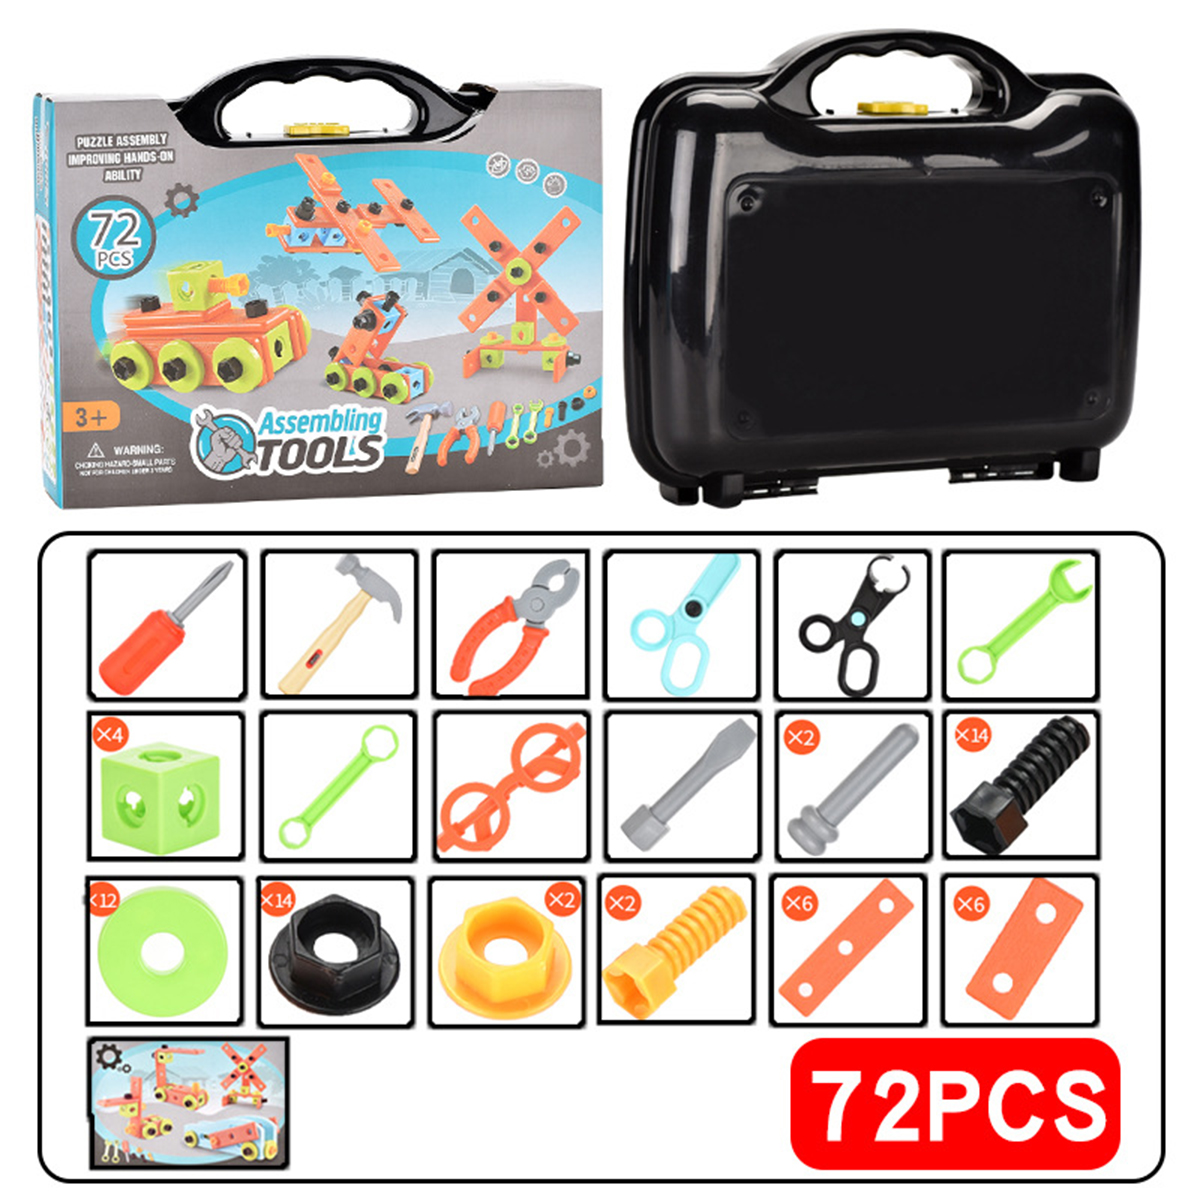 1372Pcs-3D-Puzzle-DIY-Asassembly-Screwing-Blocks-Repair-Tool-Kit-Educational-Toy-for-Kids-Gift-1735098-5